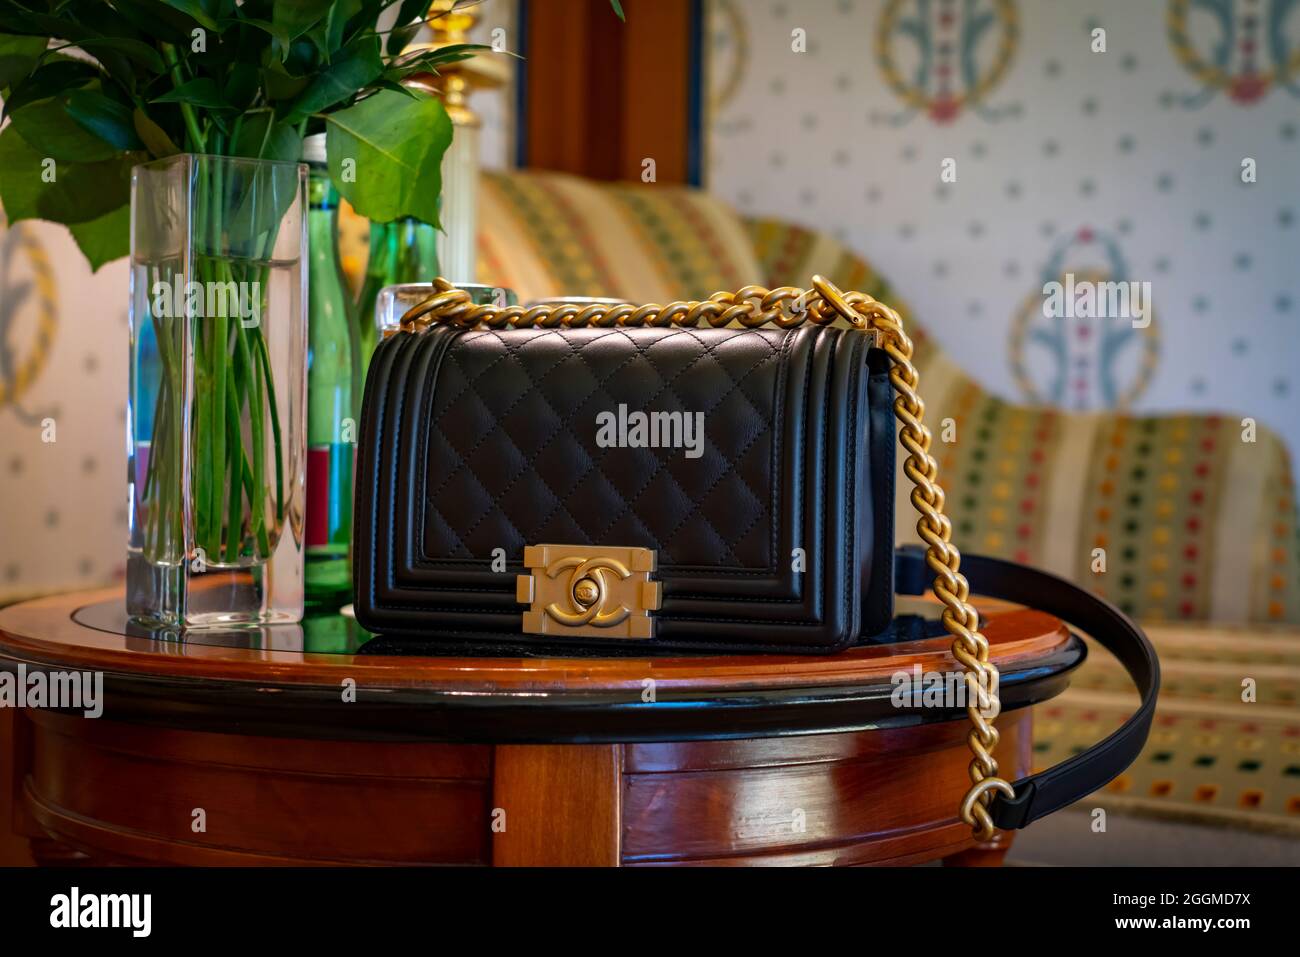 luxury purses and handbags chanel